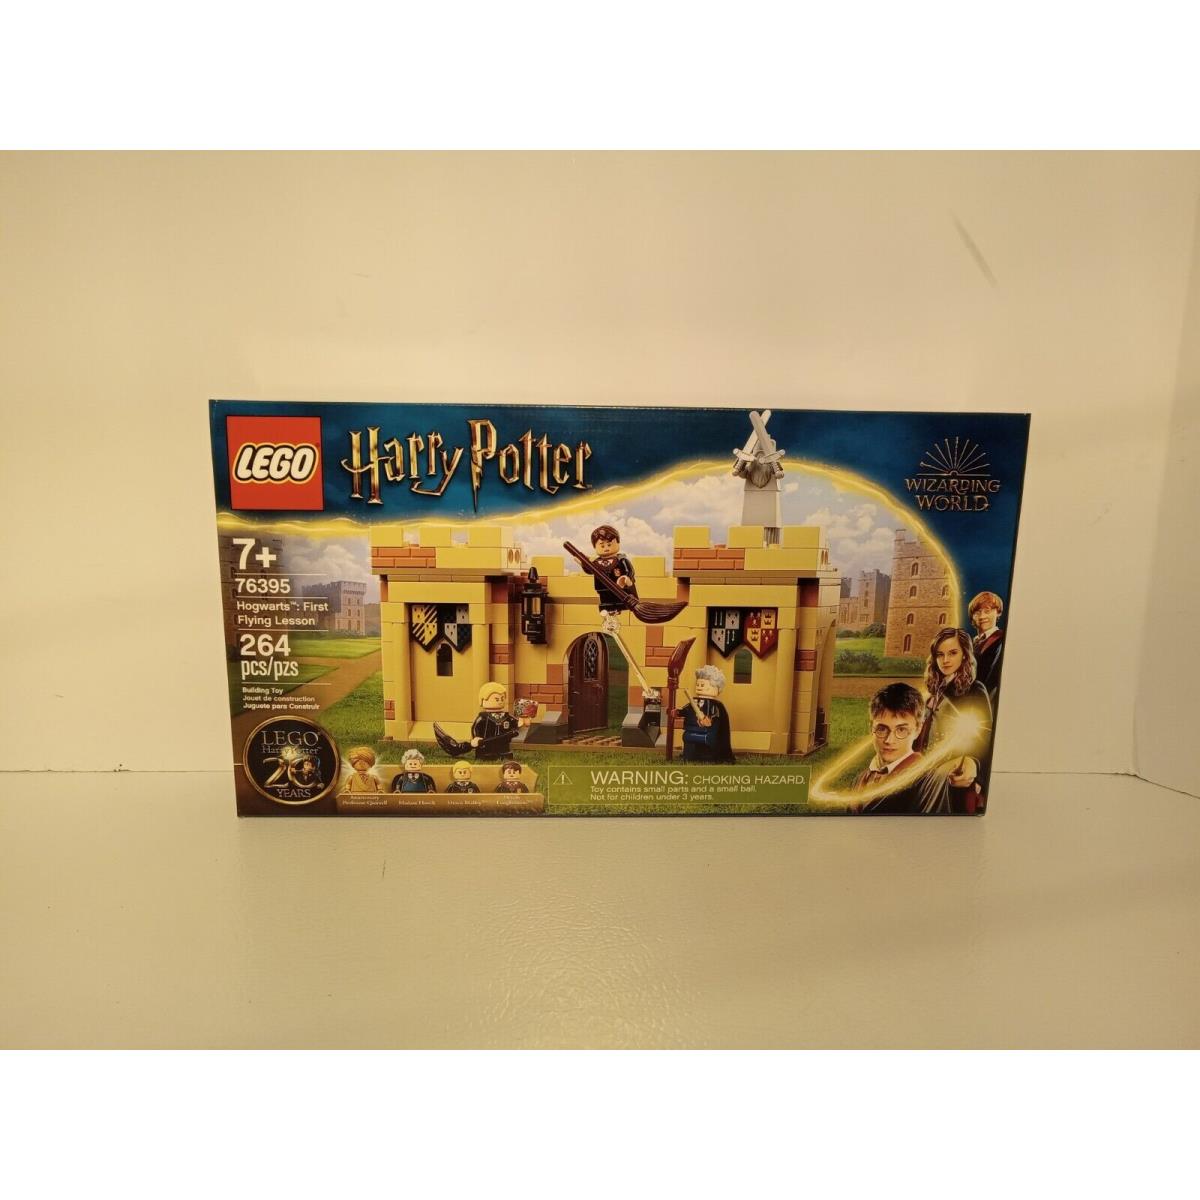 Lego 76395 Harry Potter Hogwarts: First Flying Lesson 264 Pcs